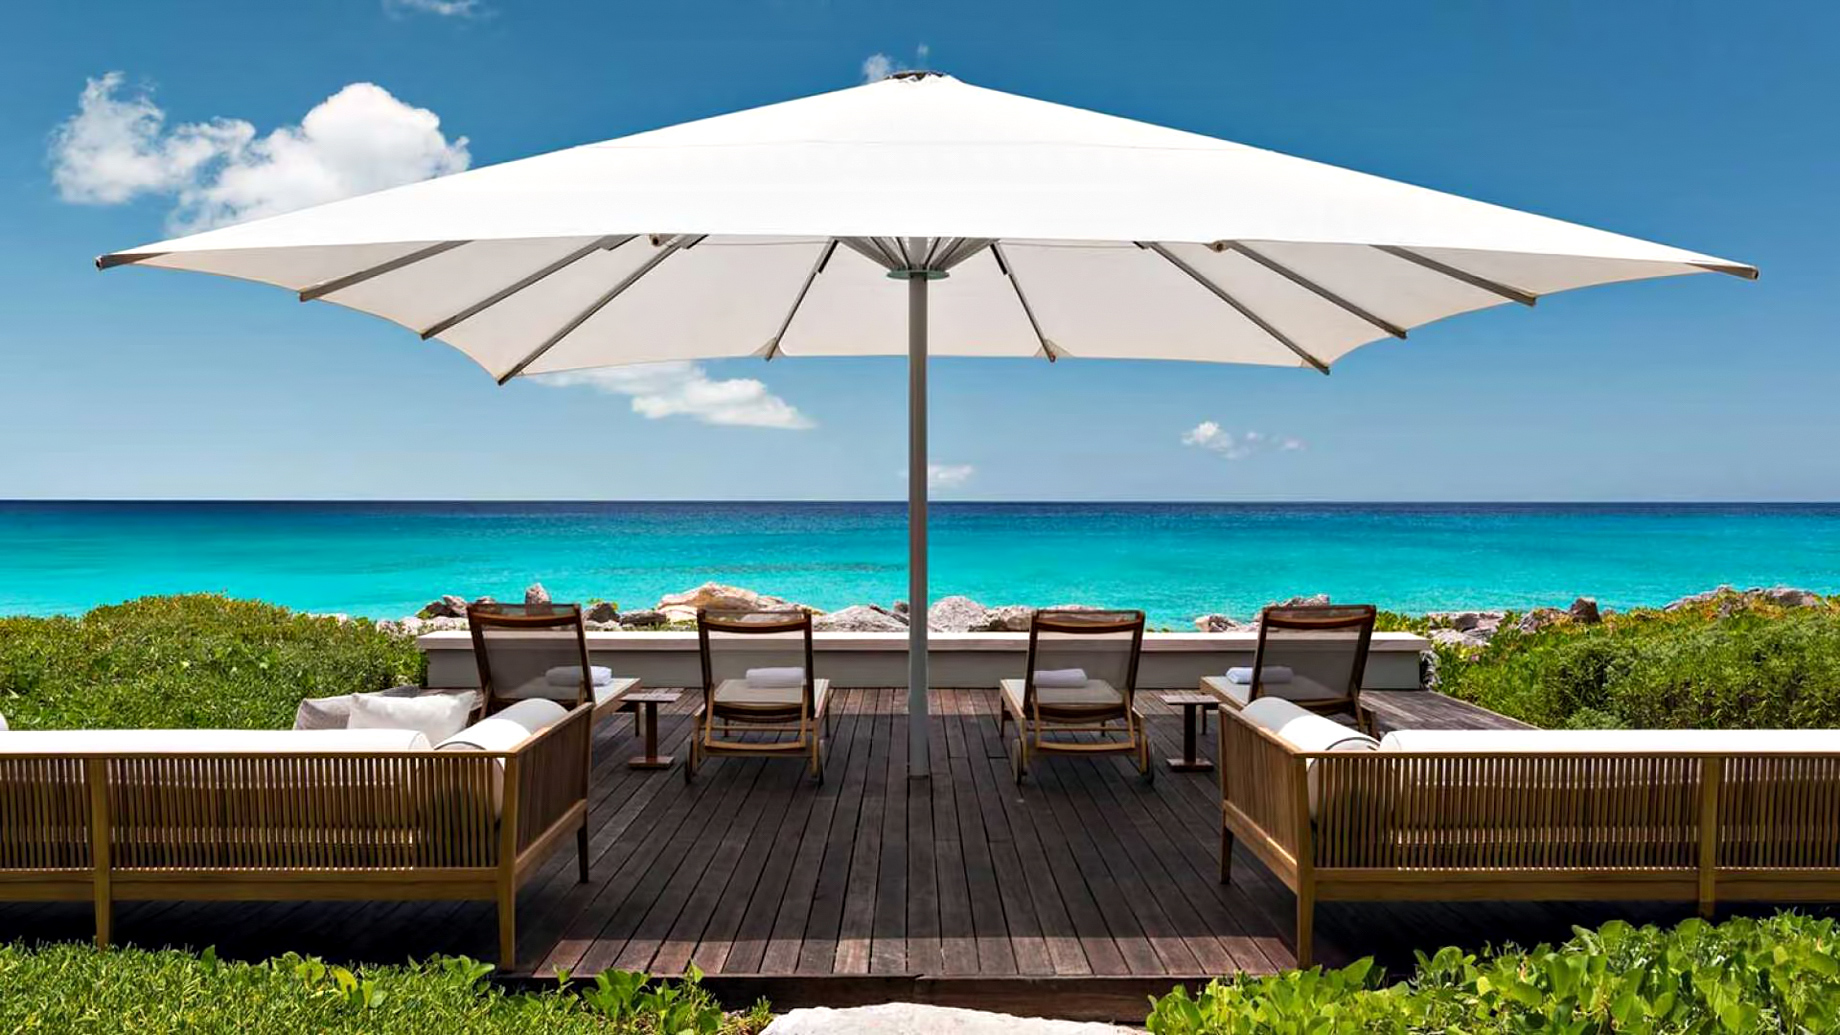 Amanyara Resort – Providenciales, Turks and Caicos Islands – Beachfront Umbrella Deck Chairs